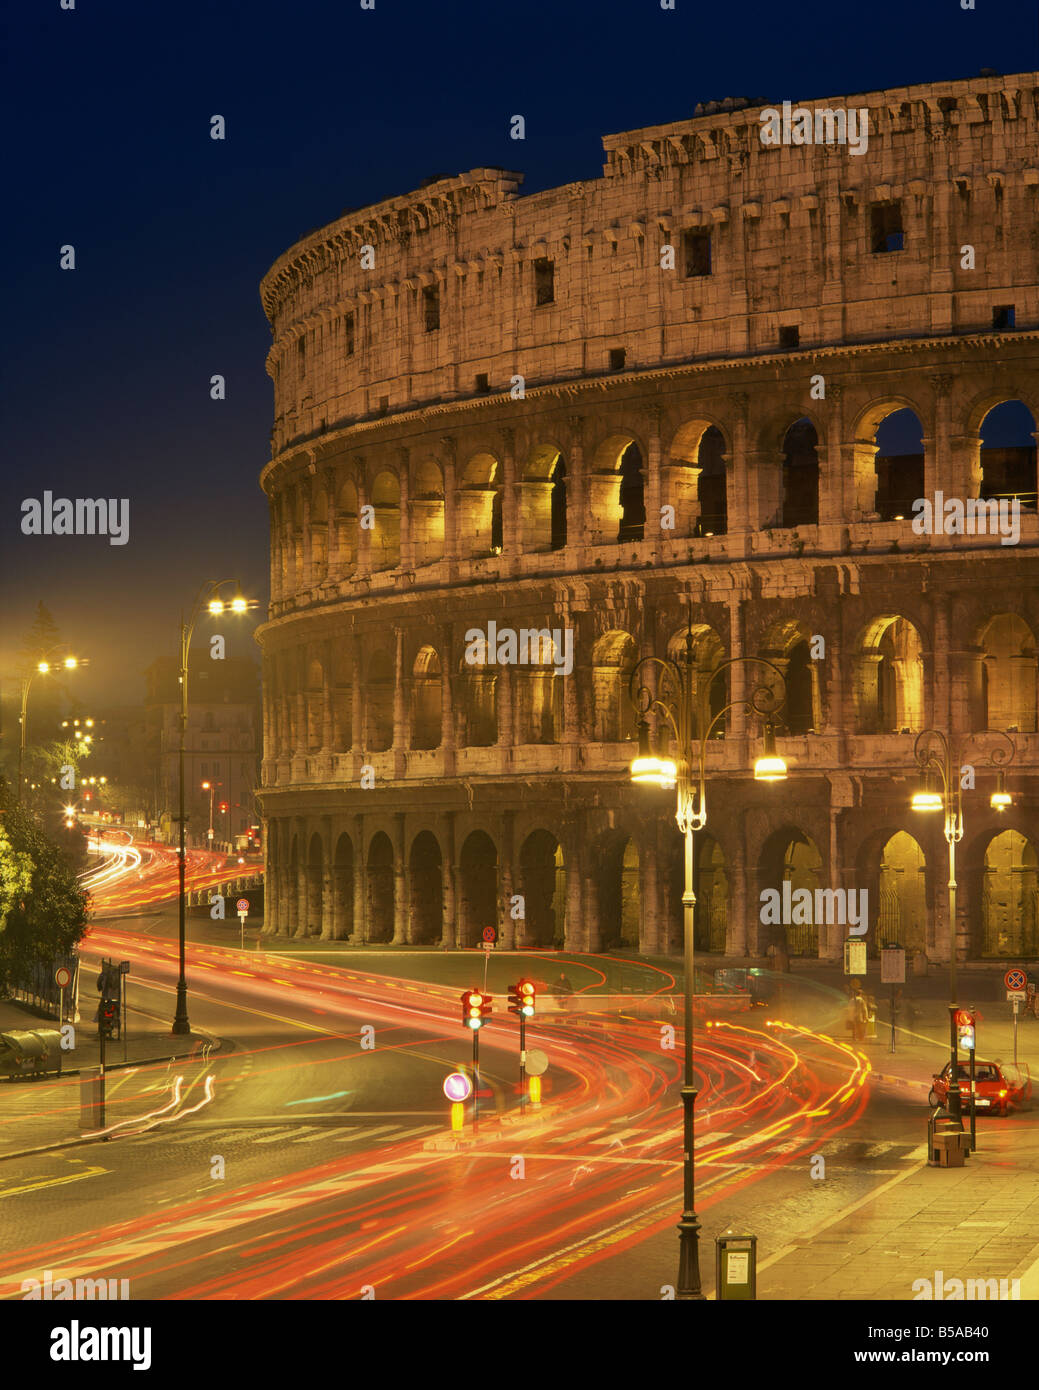 The Colosseum illuminated at night in Rome Lazio Italy Europe Stock Photo